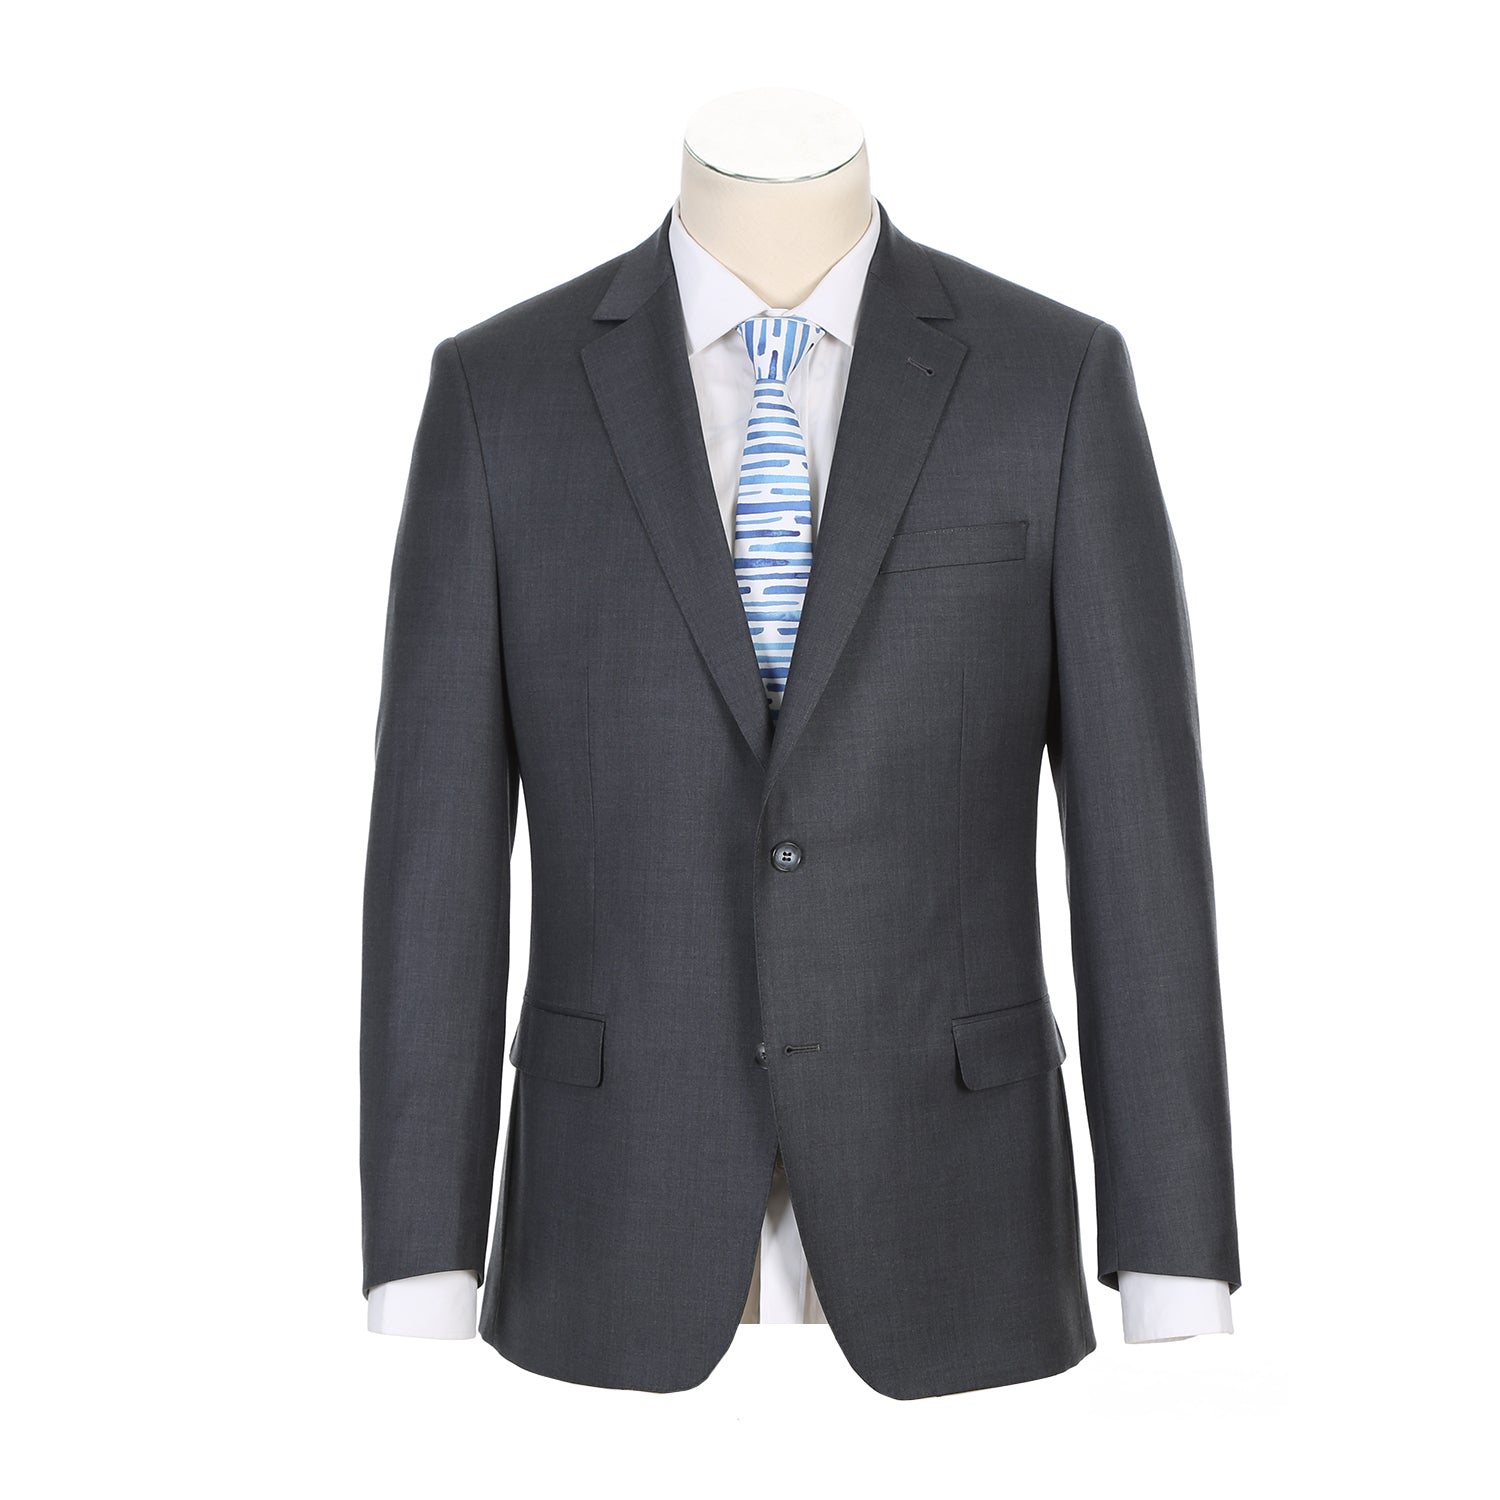 Rivelino Men's Gray Half-Canvas Suit